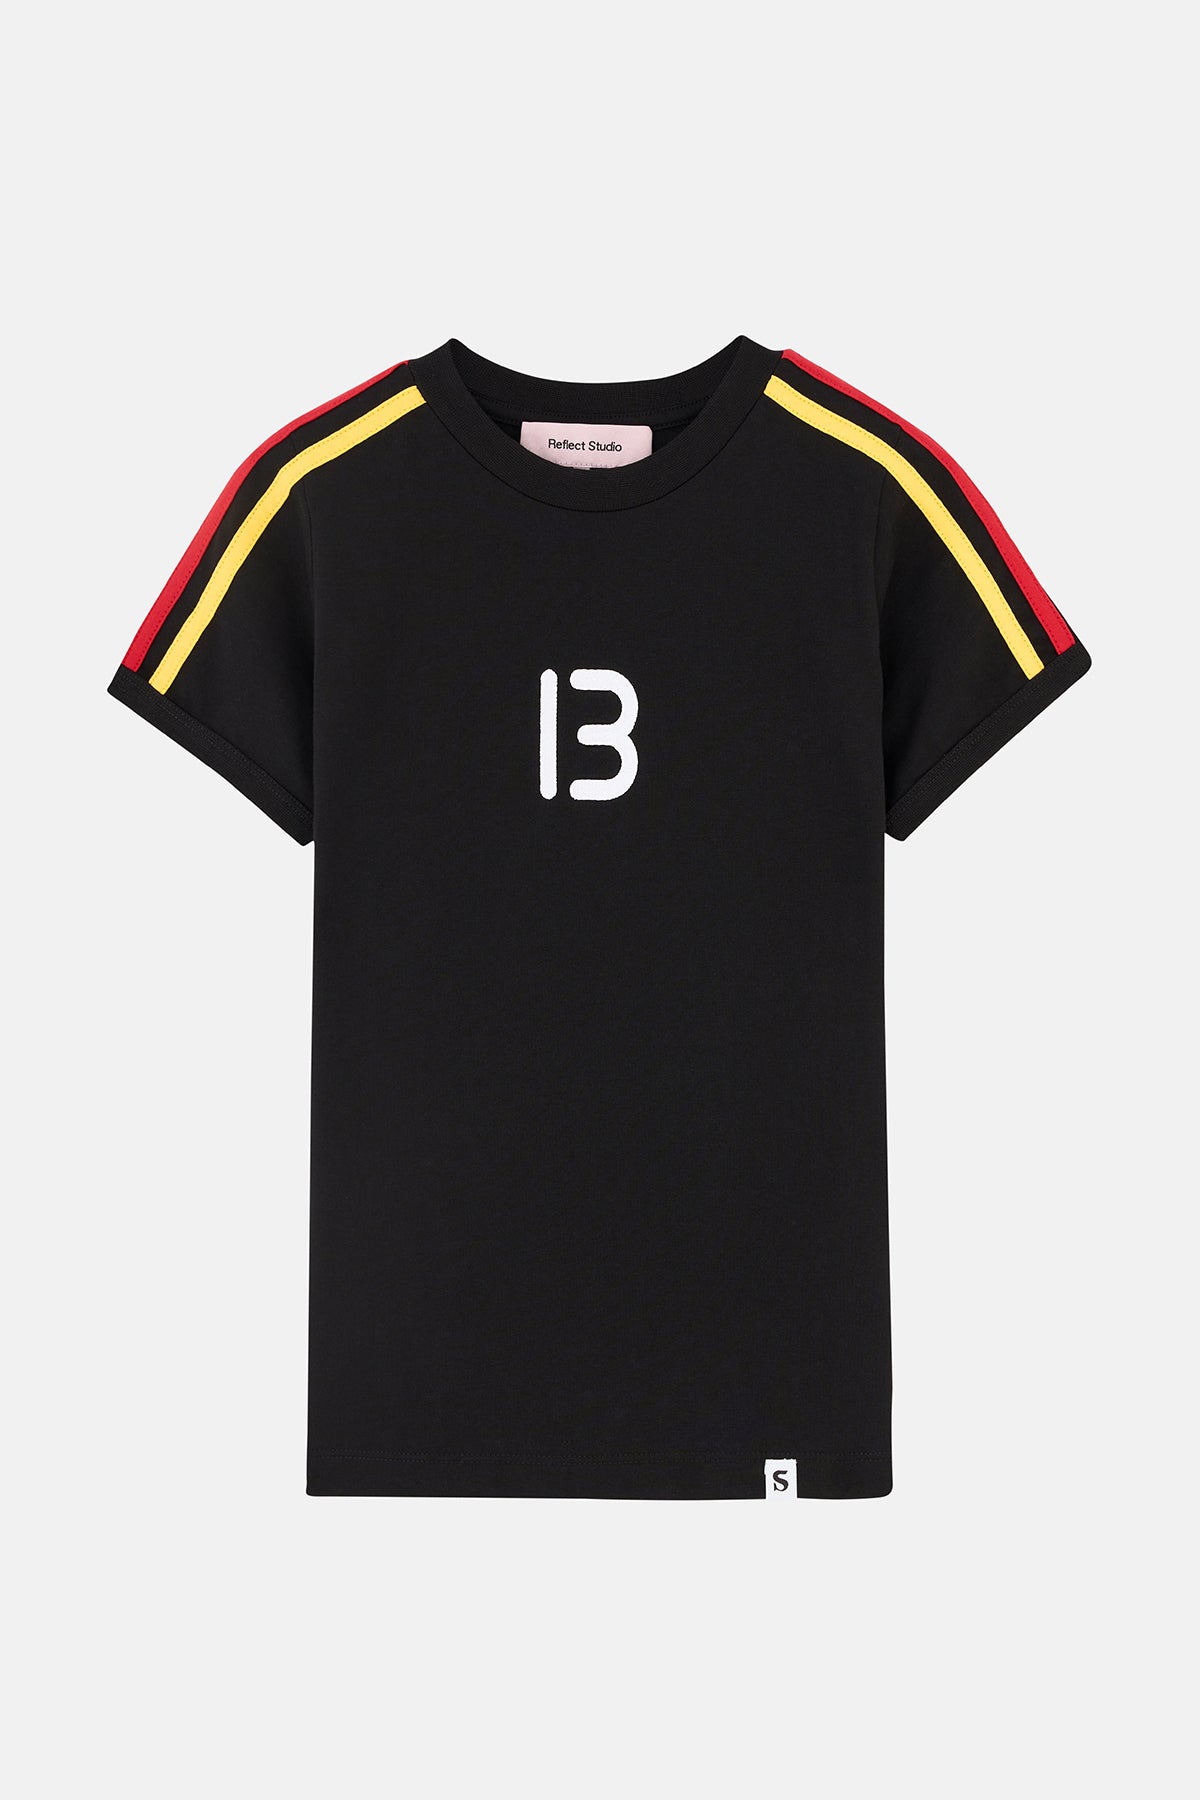 Germany 13 Supreme Çocuk T-shirt - Siyah